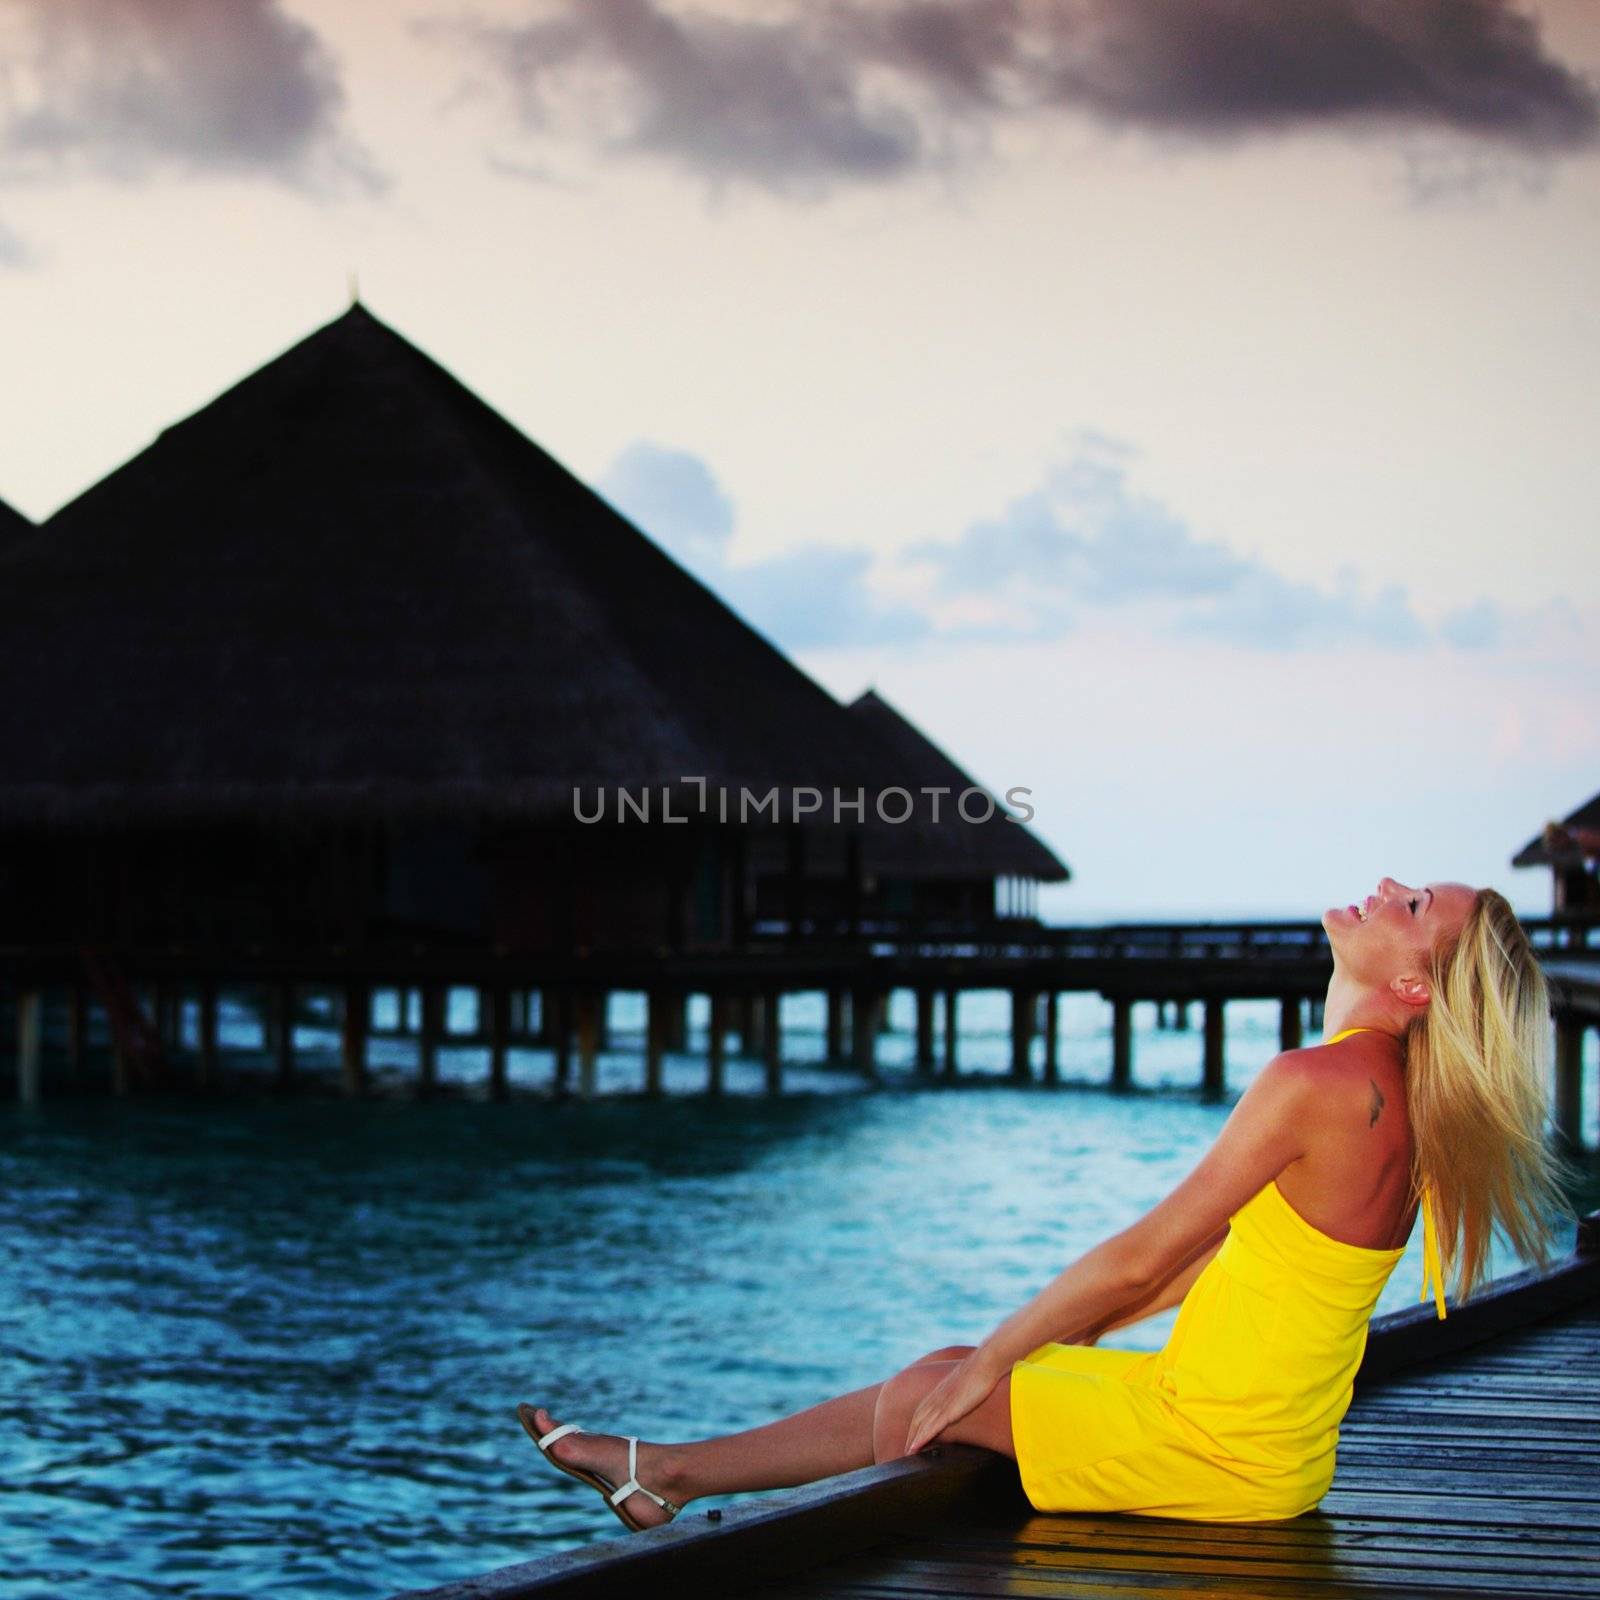 woman on tropical beach by Yellowj